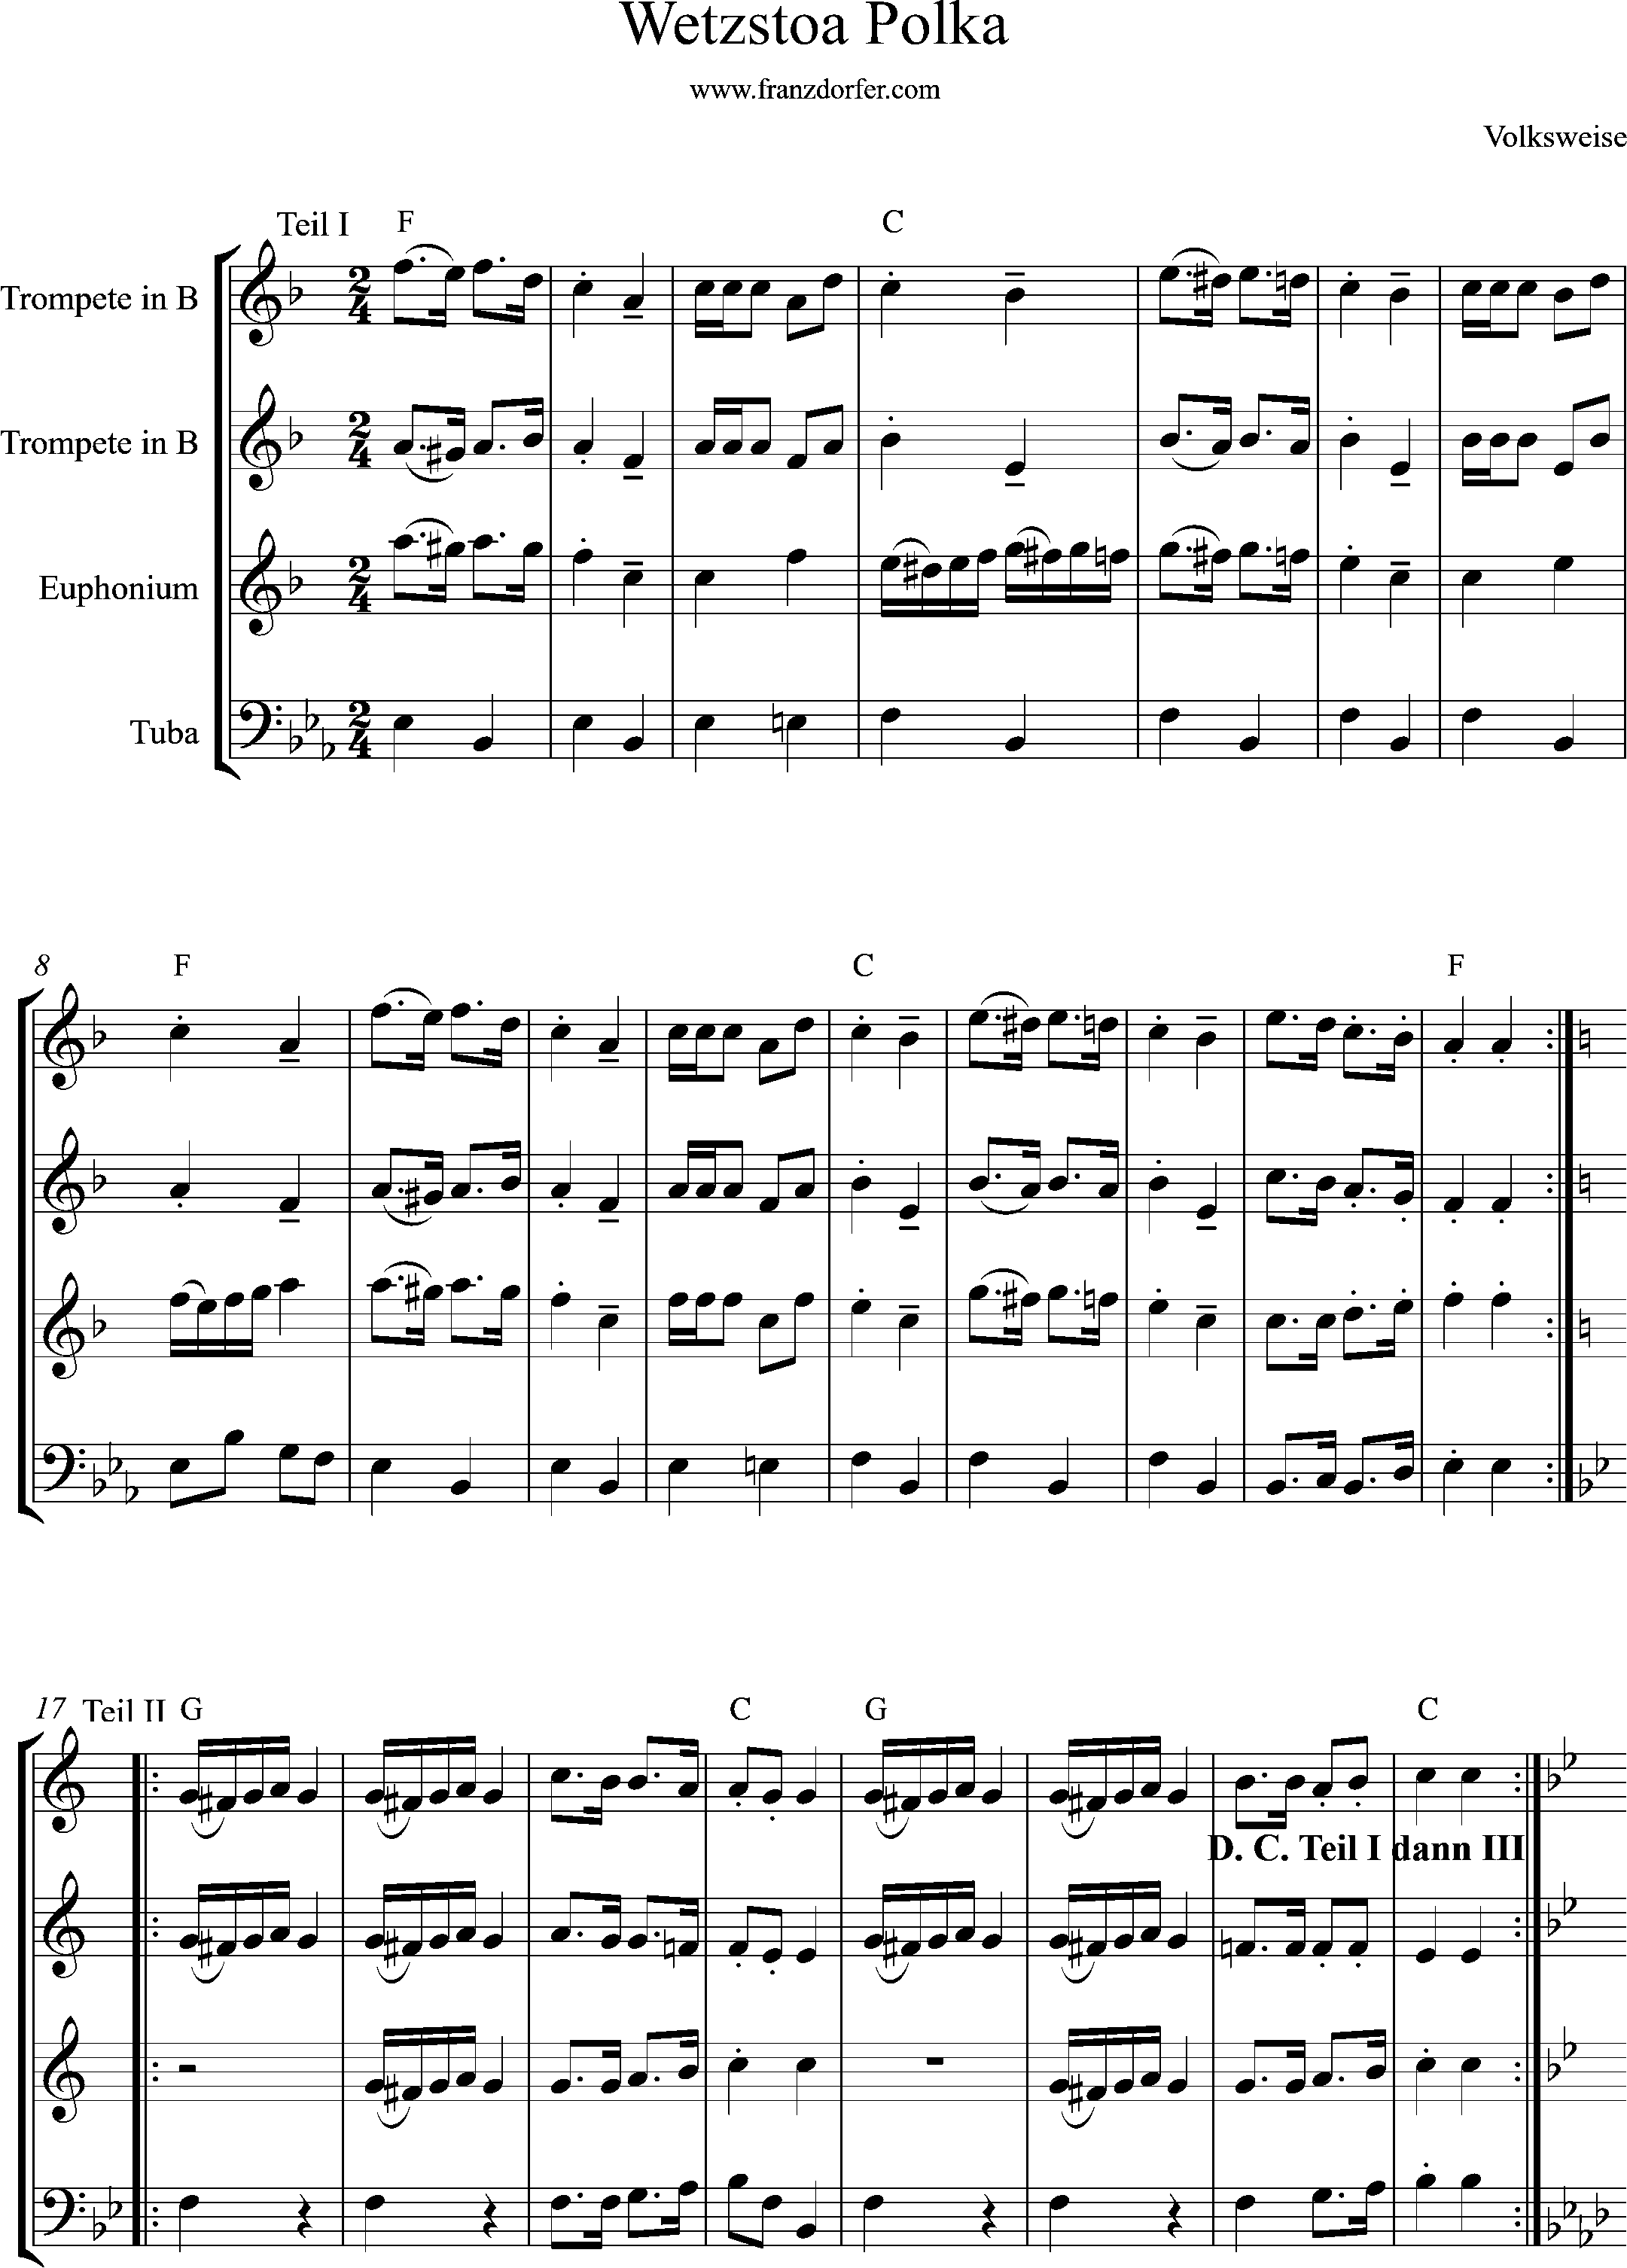 Noten Wetzstoa Polka- Seite 1